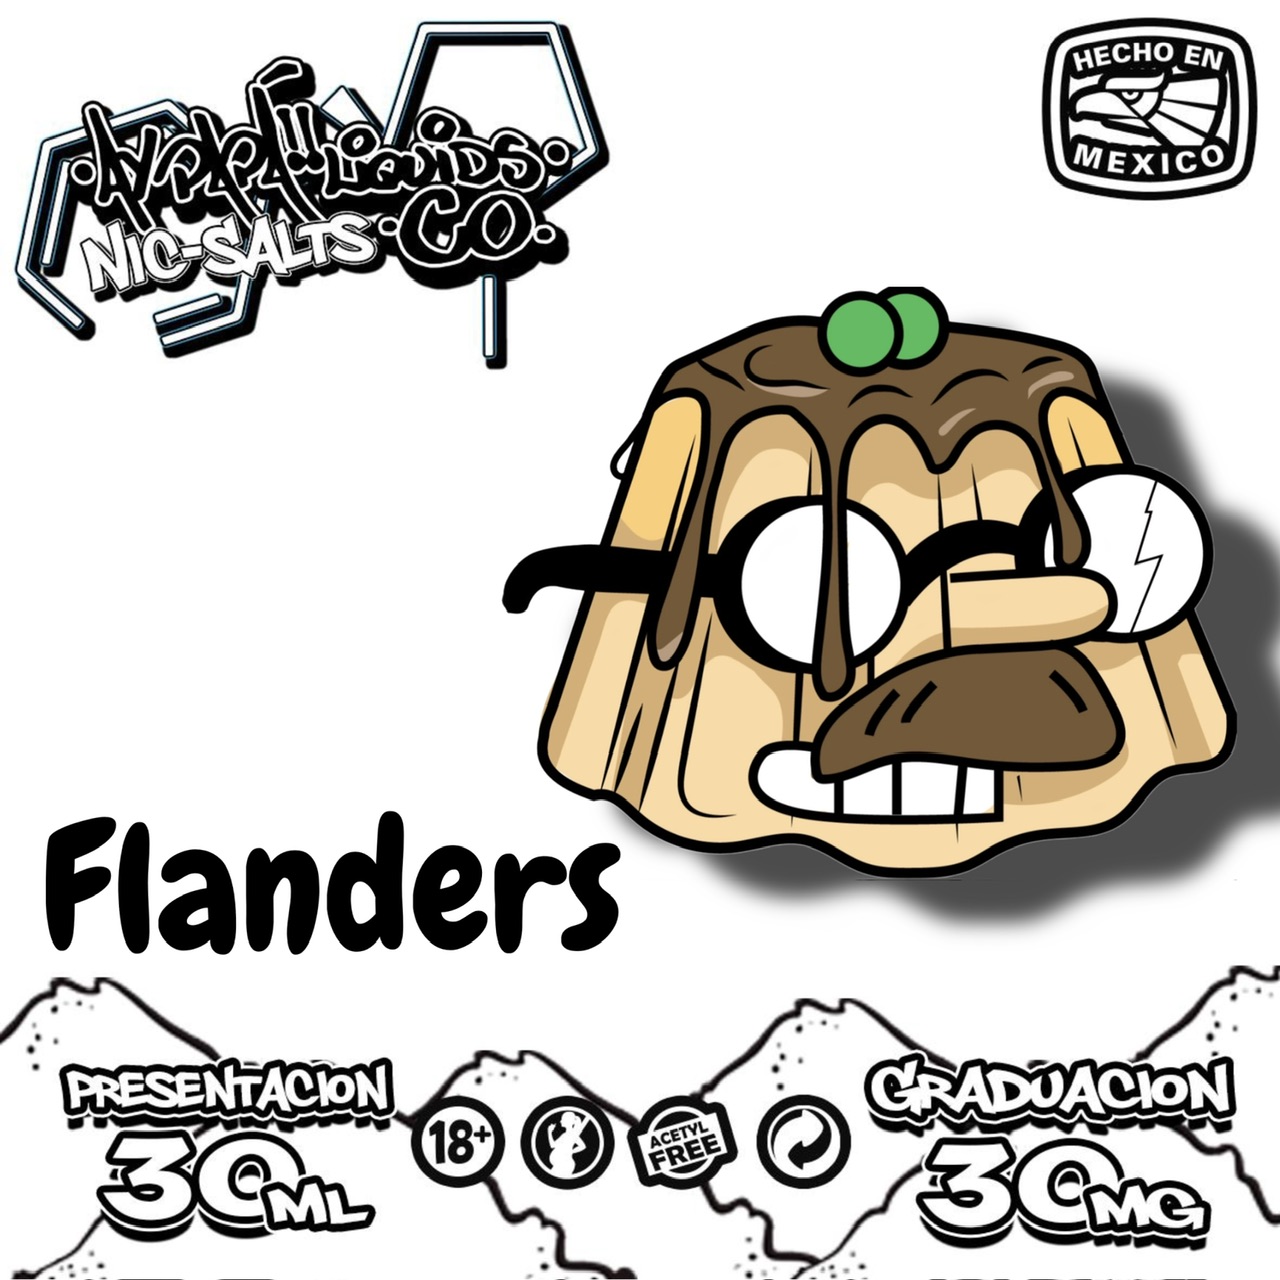 Flanders Nicsalt